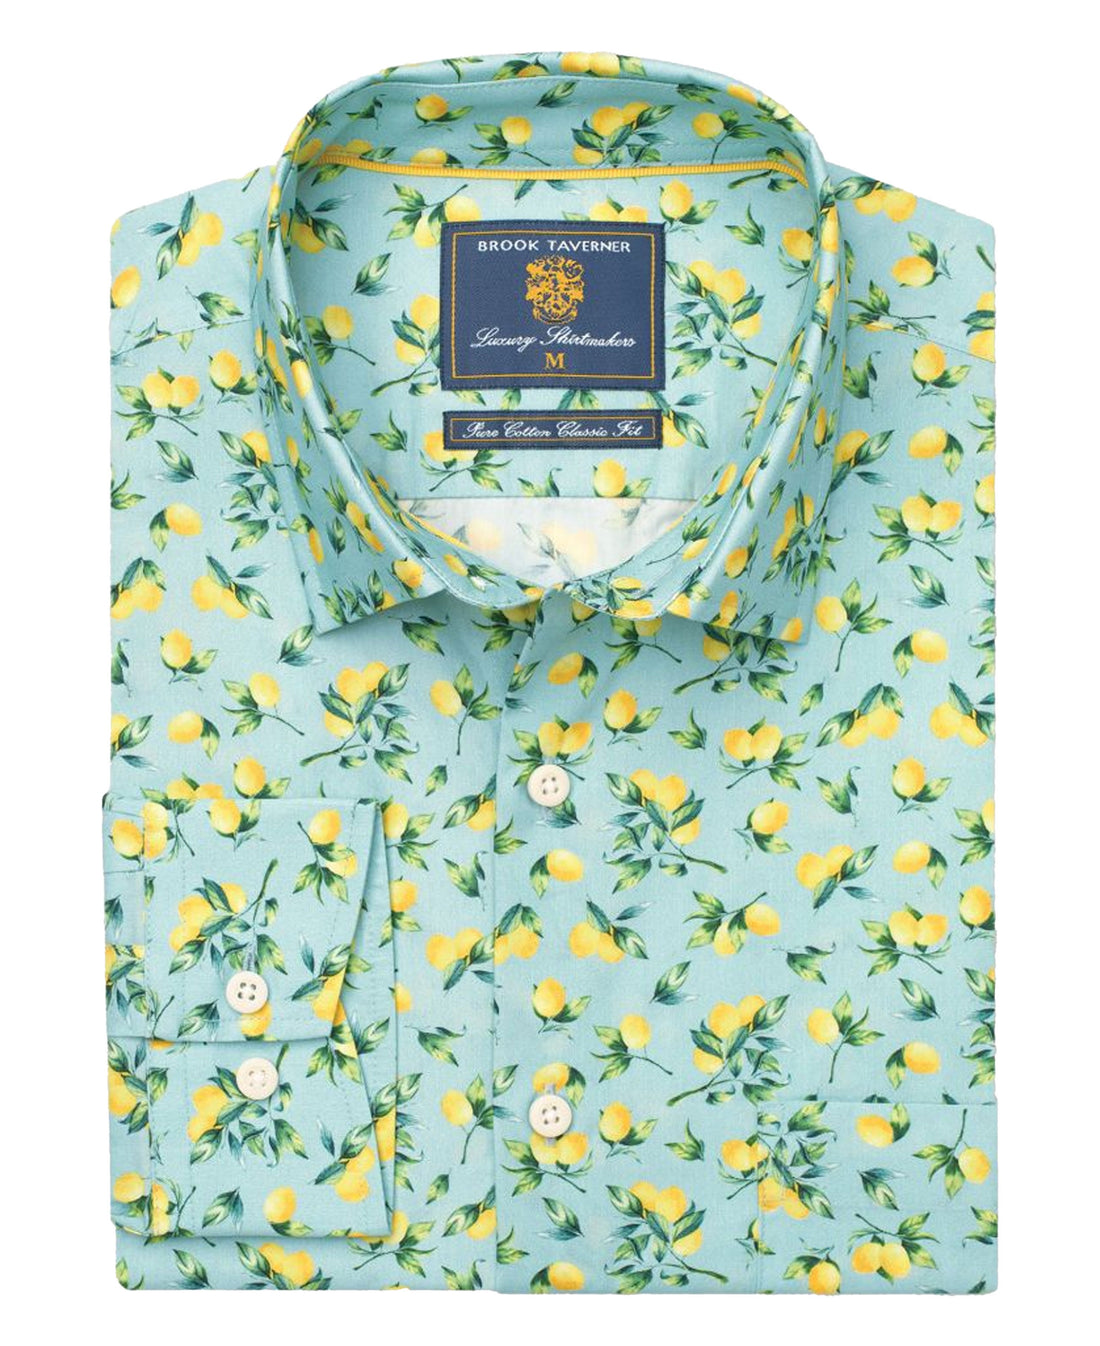 Lemon Print Shirt - Mint Green